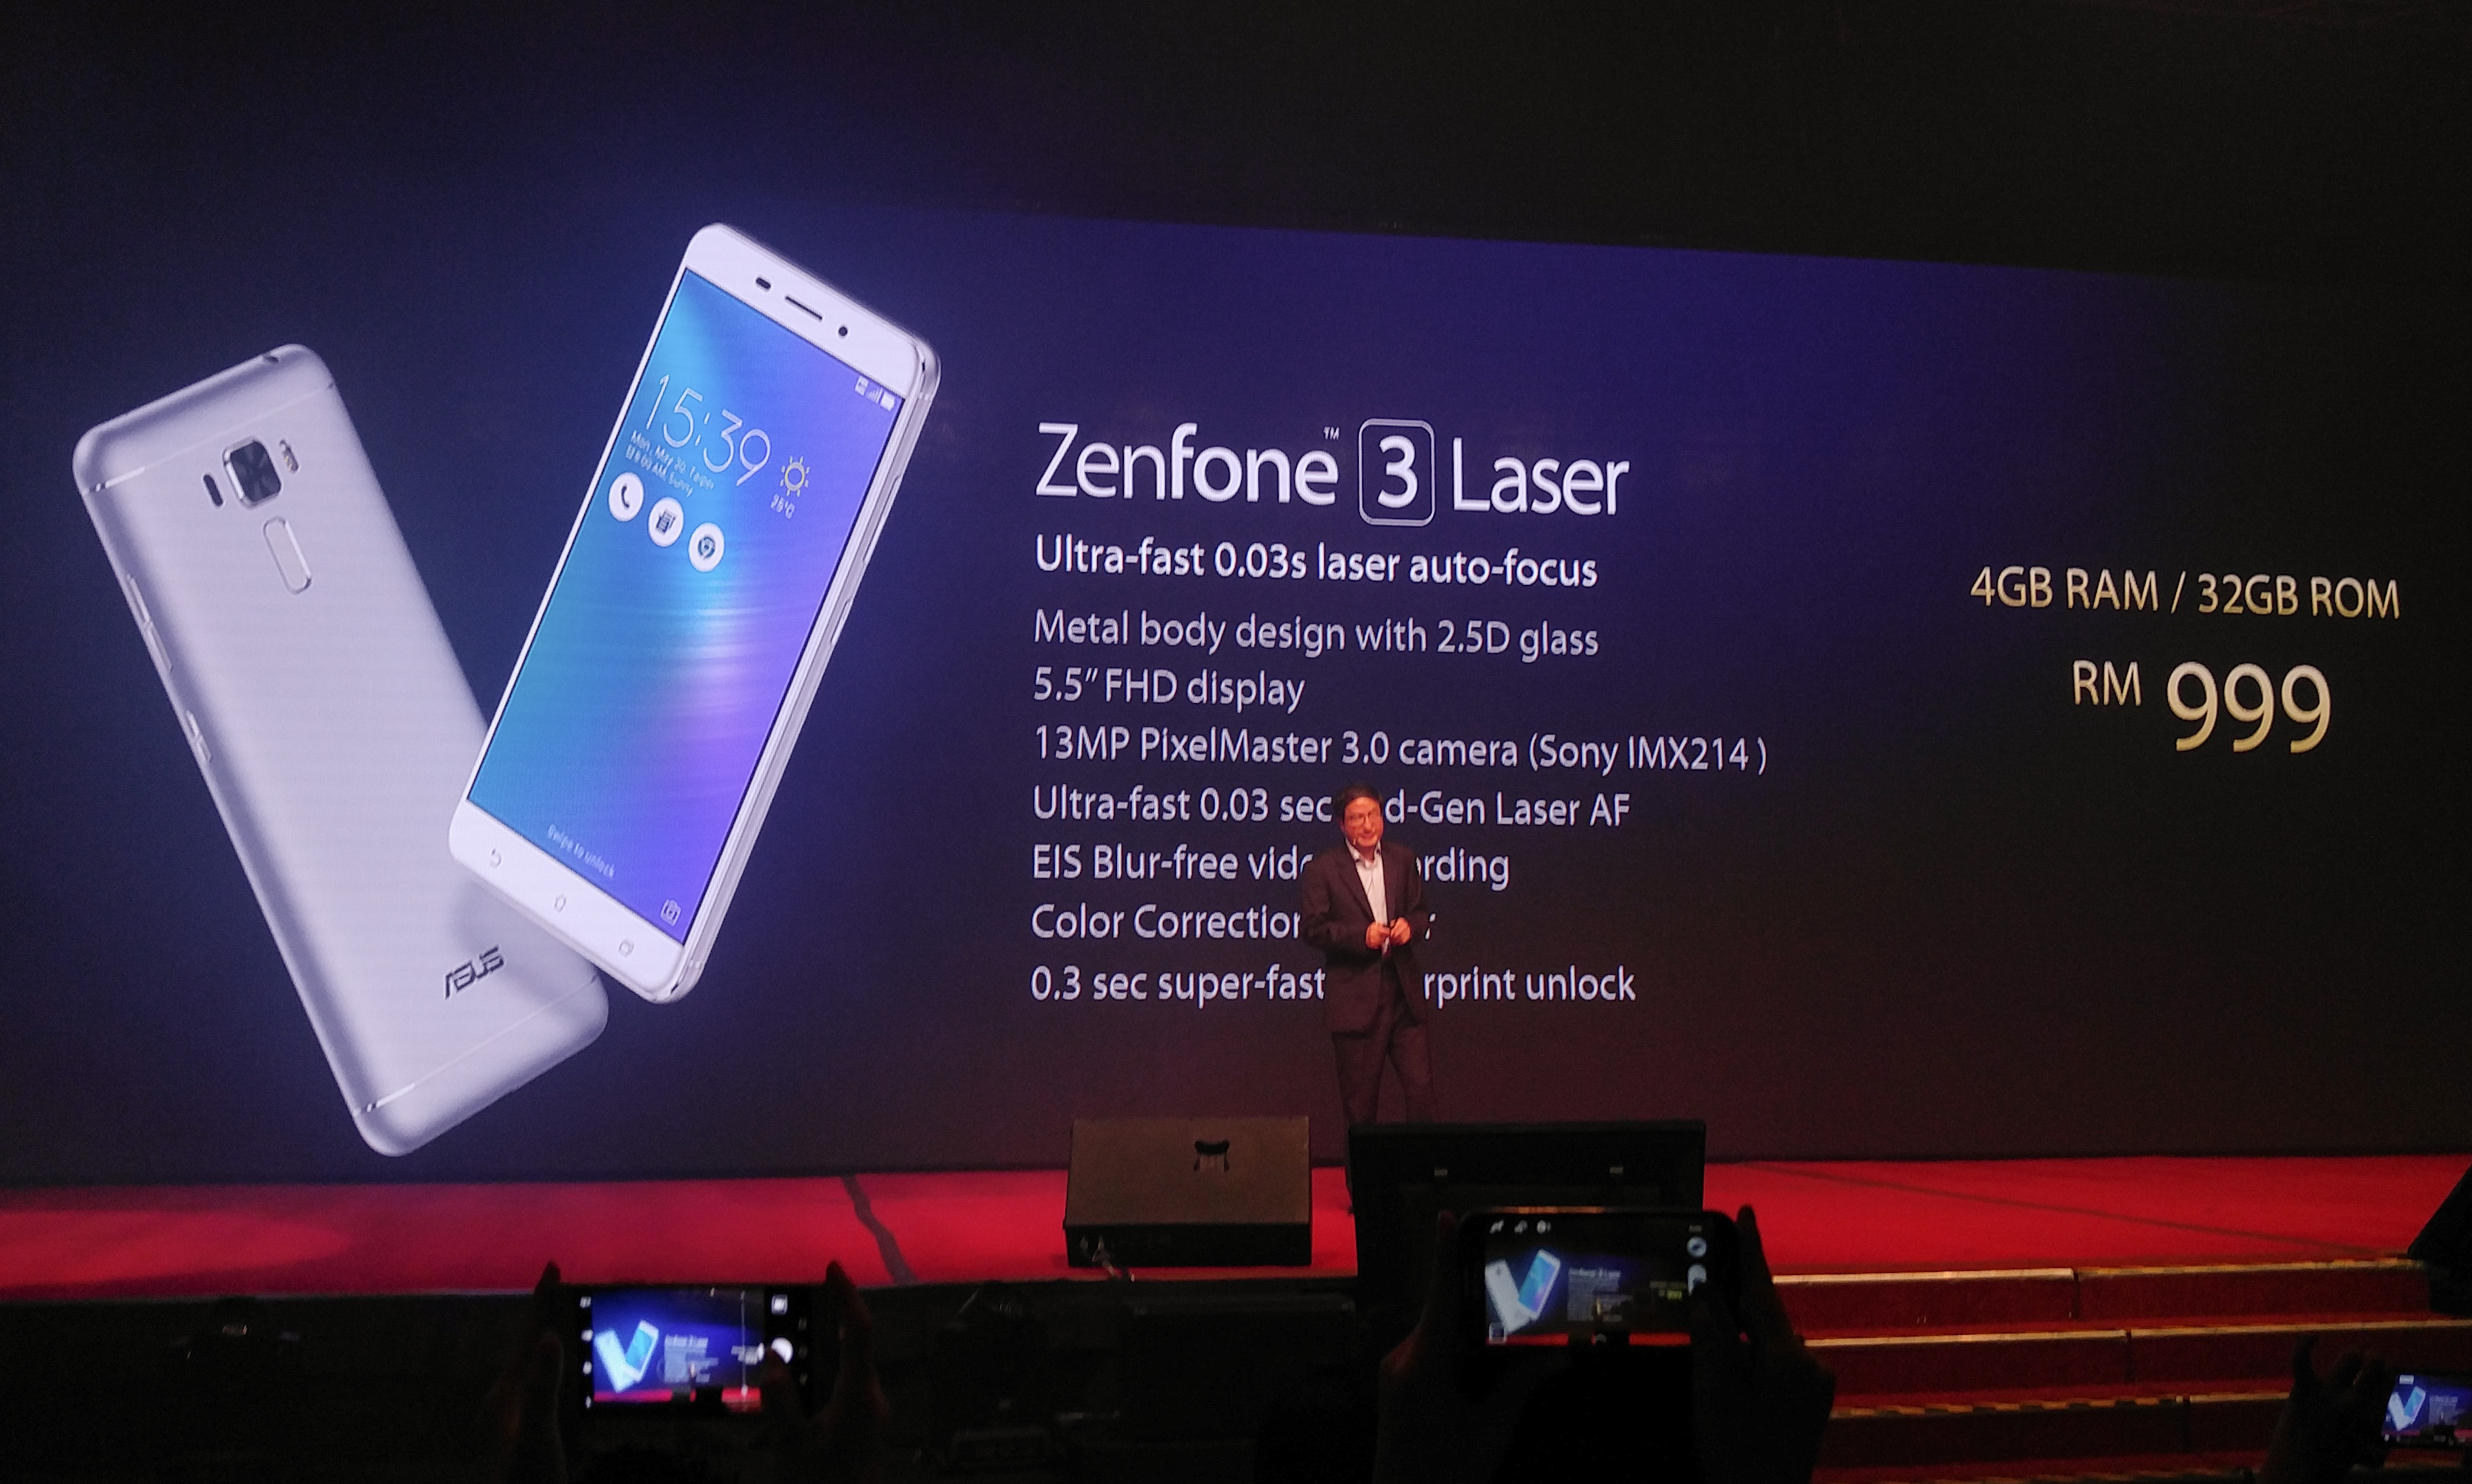 Zenfone 3 Laser